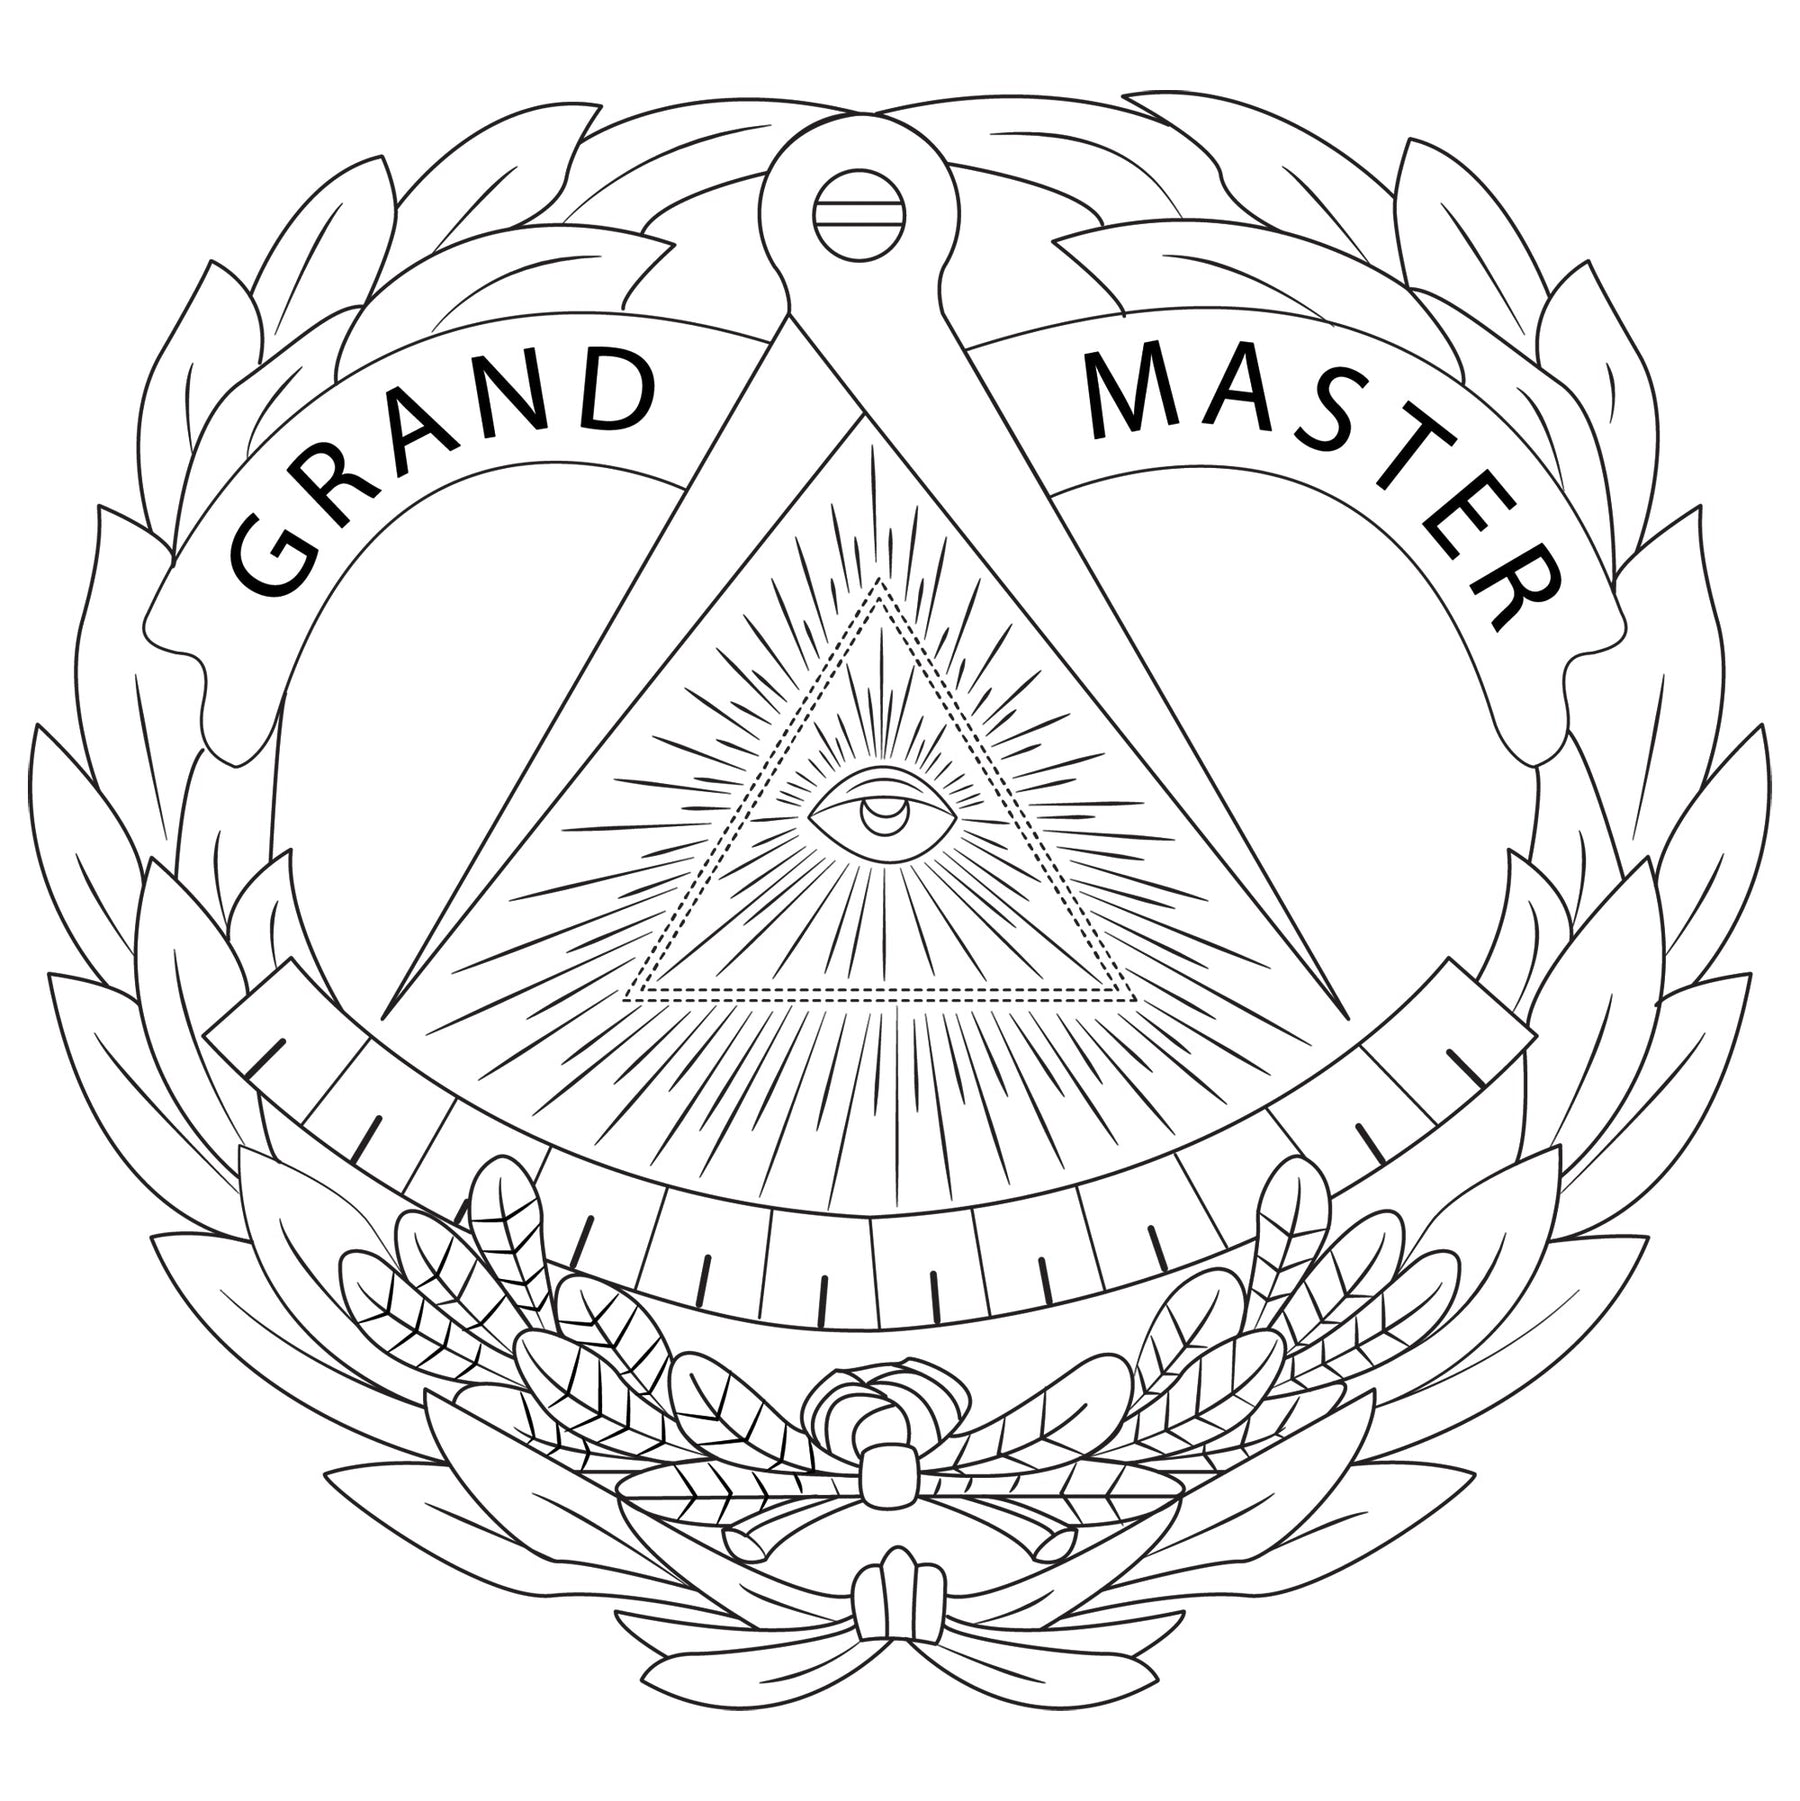 Grand Master Blue Lodge Luggage Cover - Various Sizes - Bricks Masons